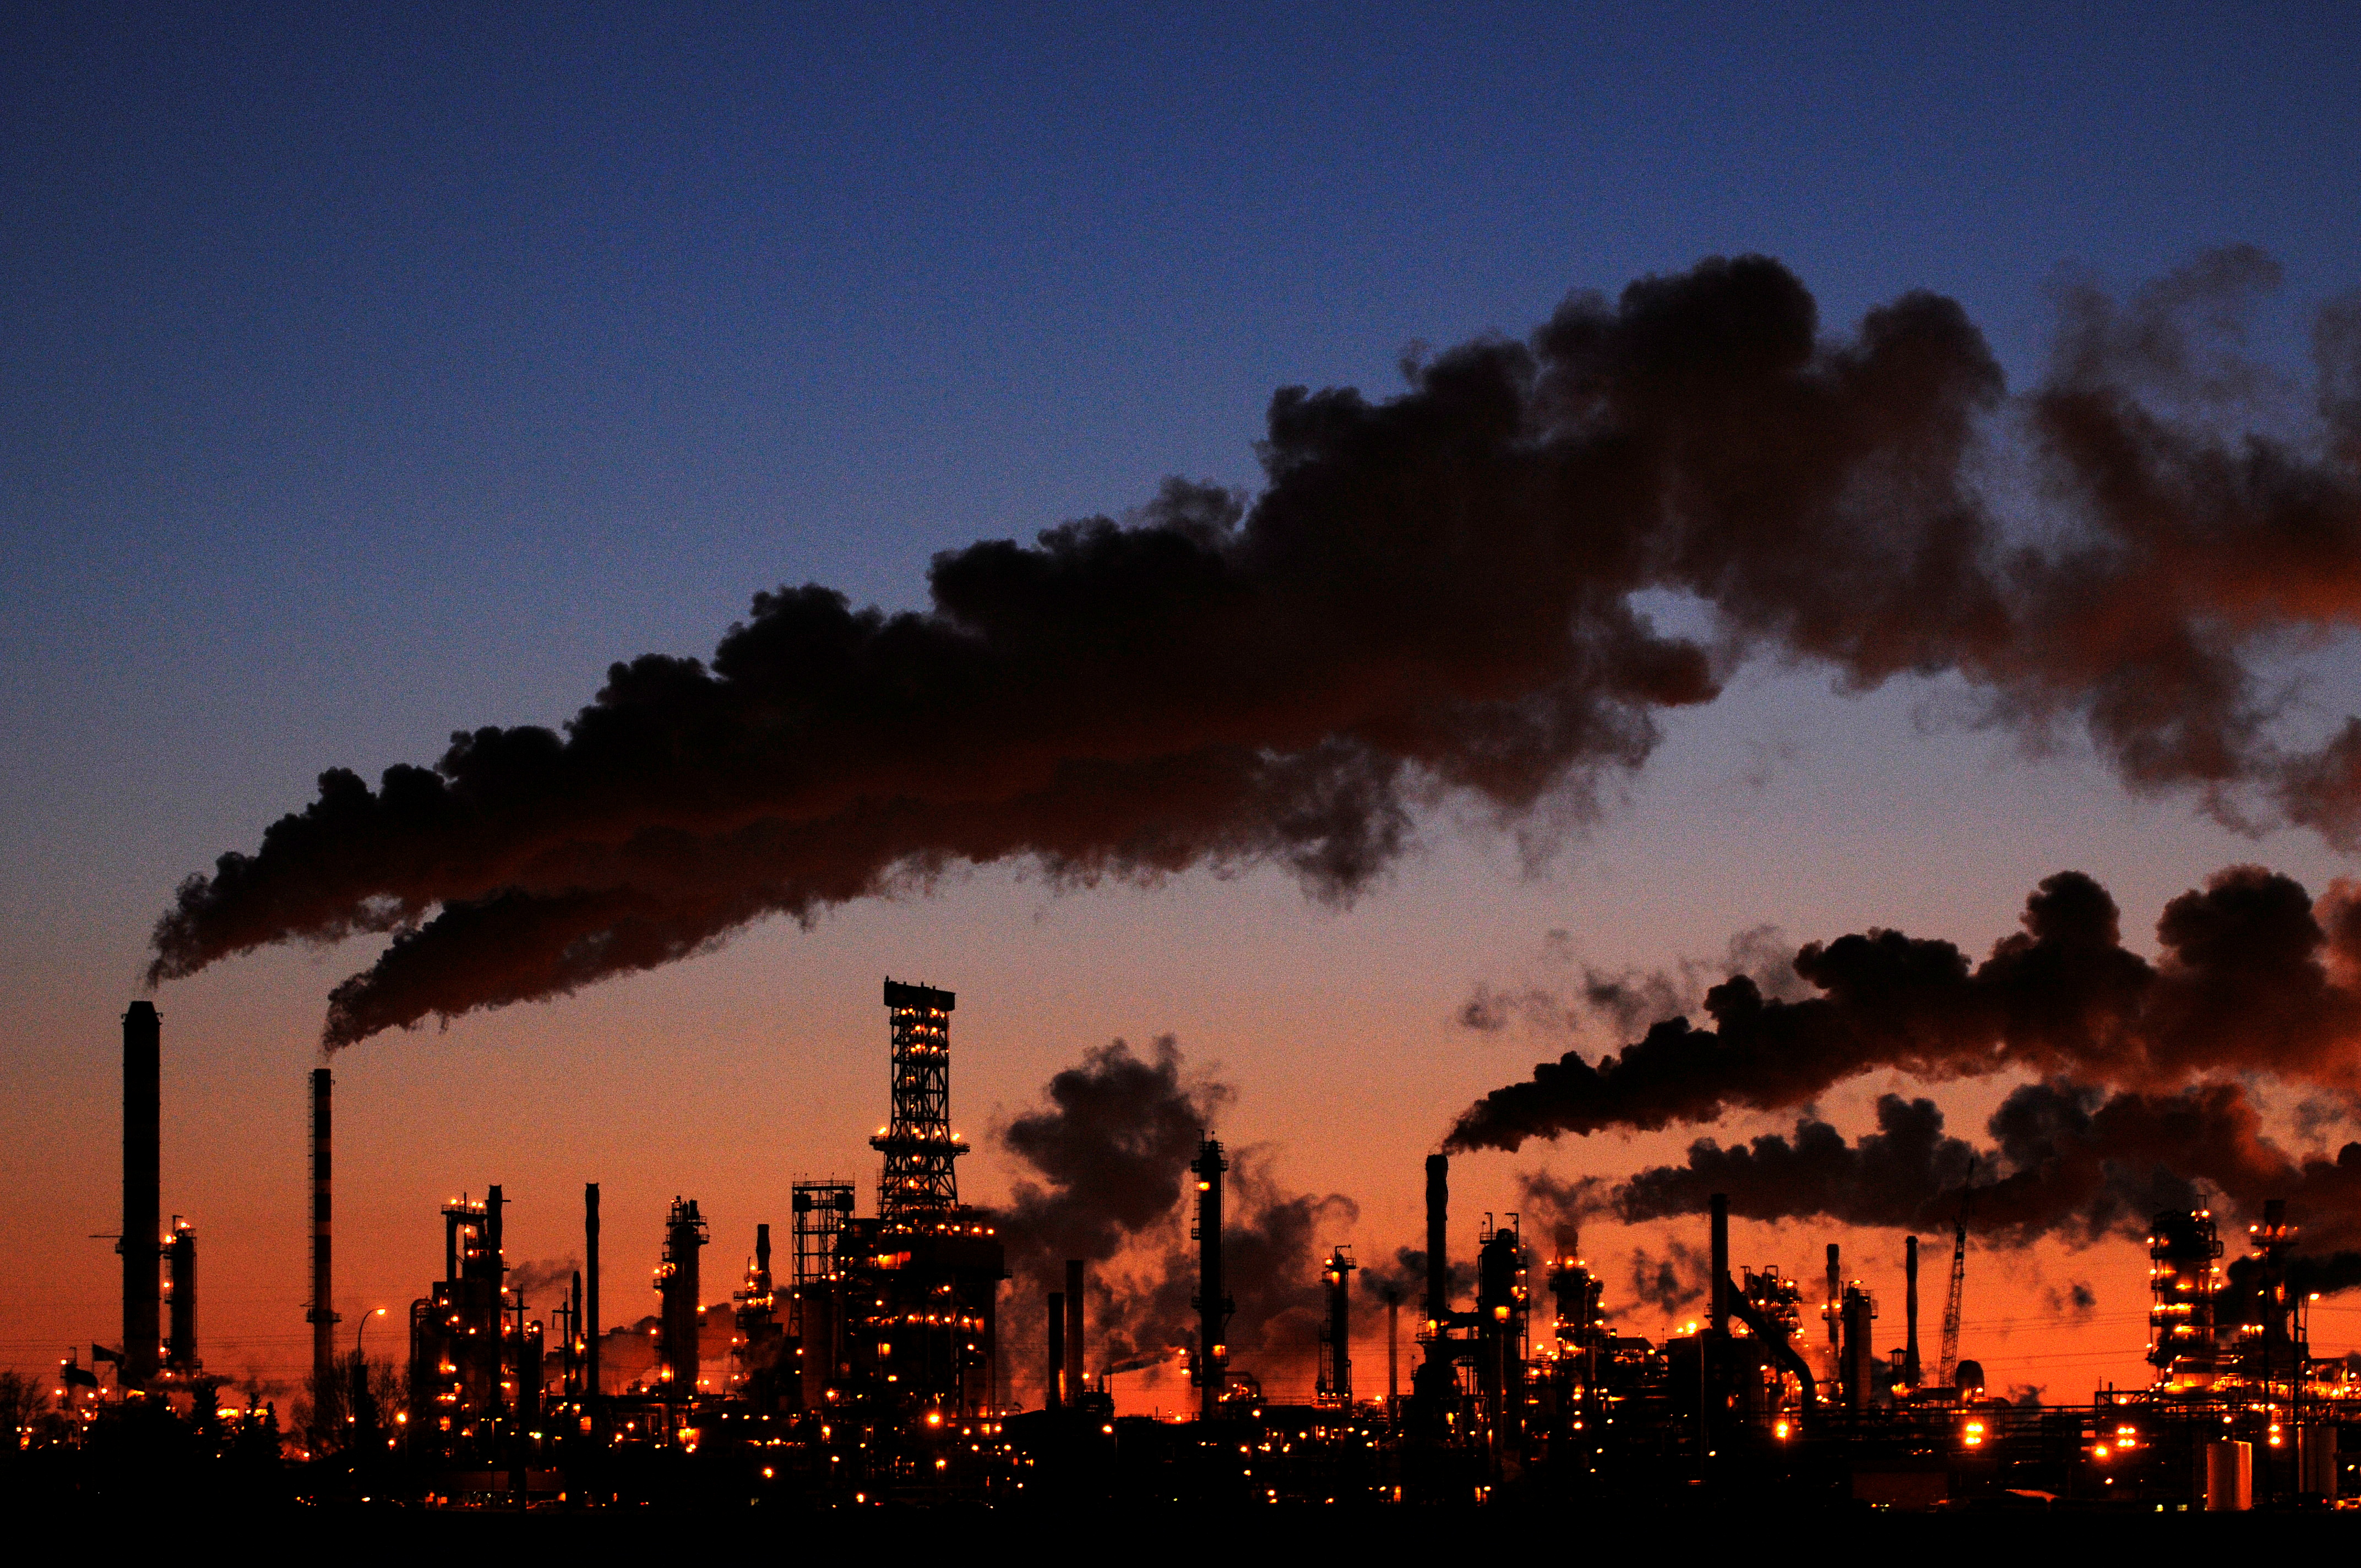 Petro-Canada's oil refinery glows at dusk in Edmonton